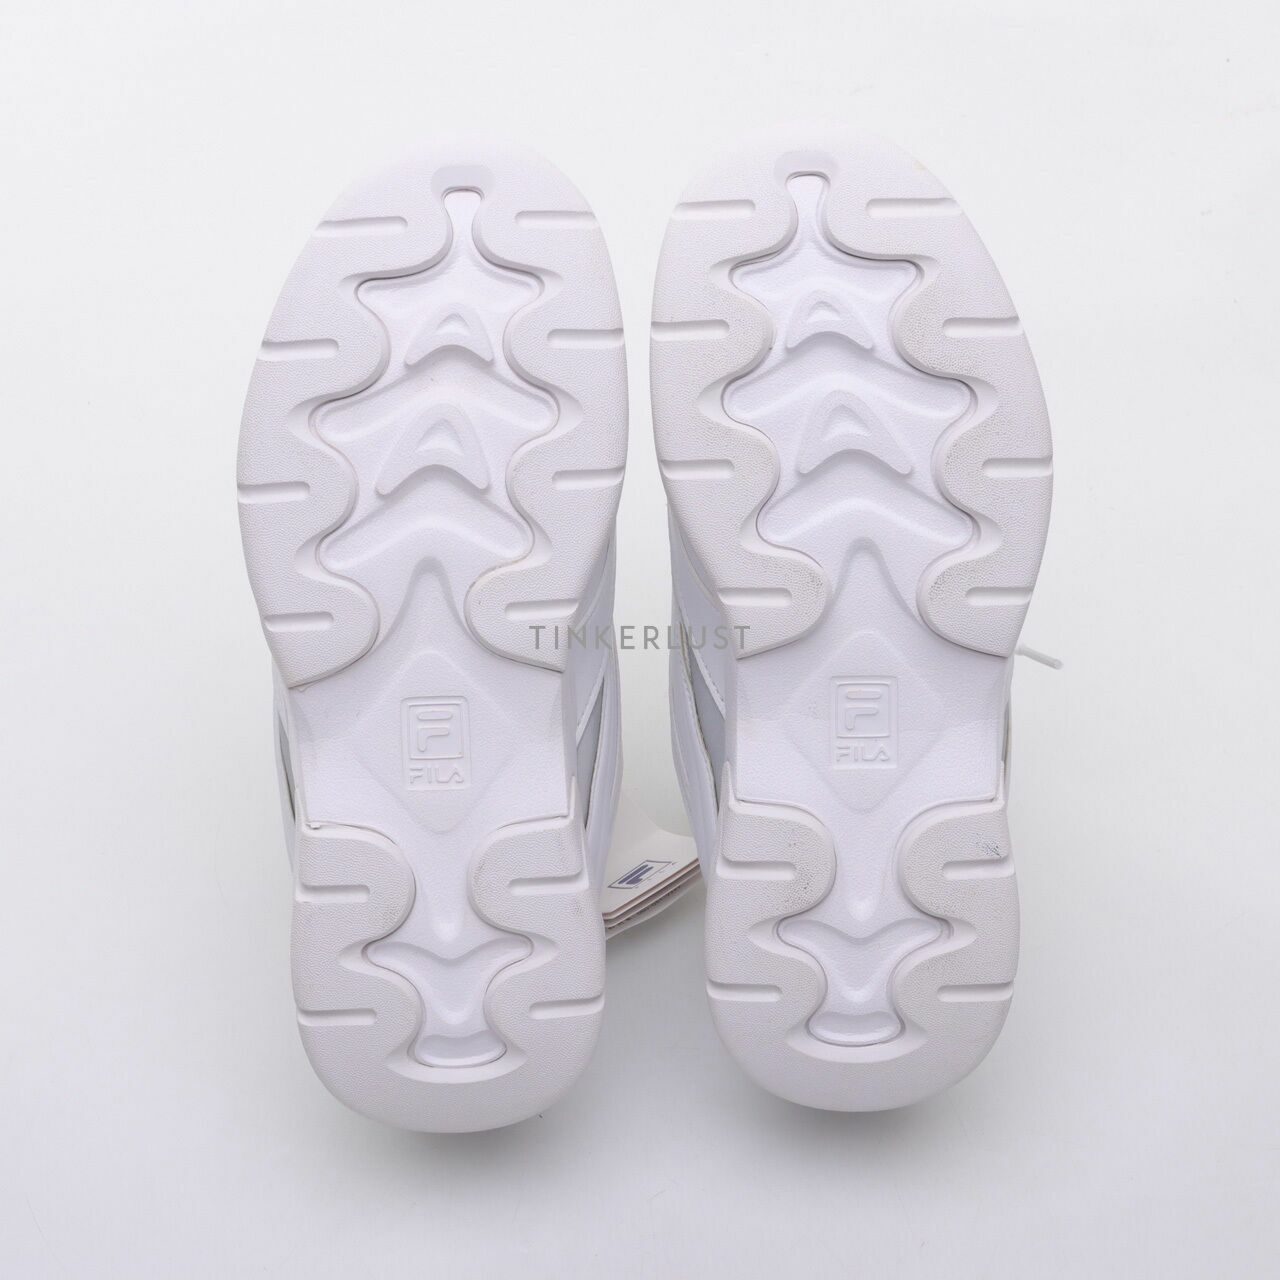 FILA White Sneakers